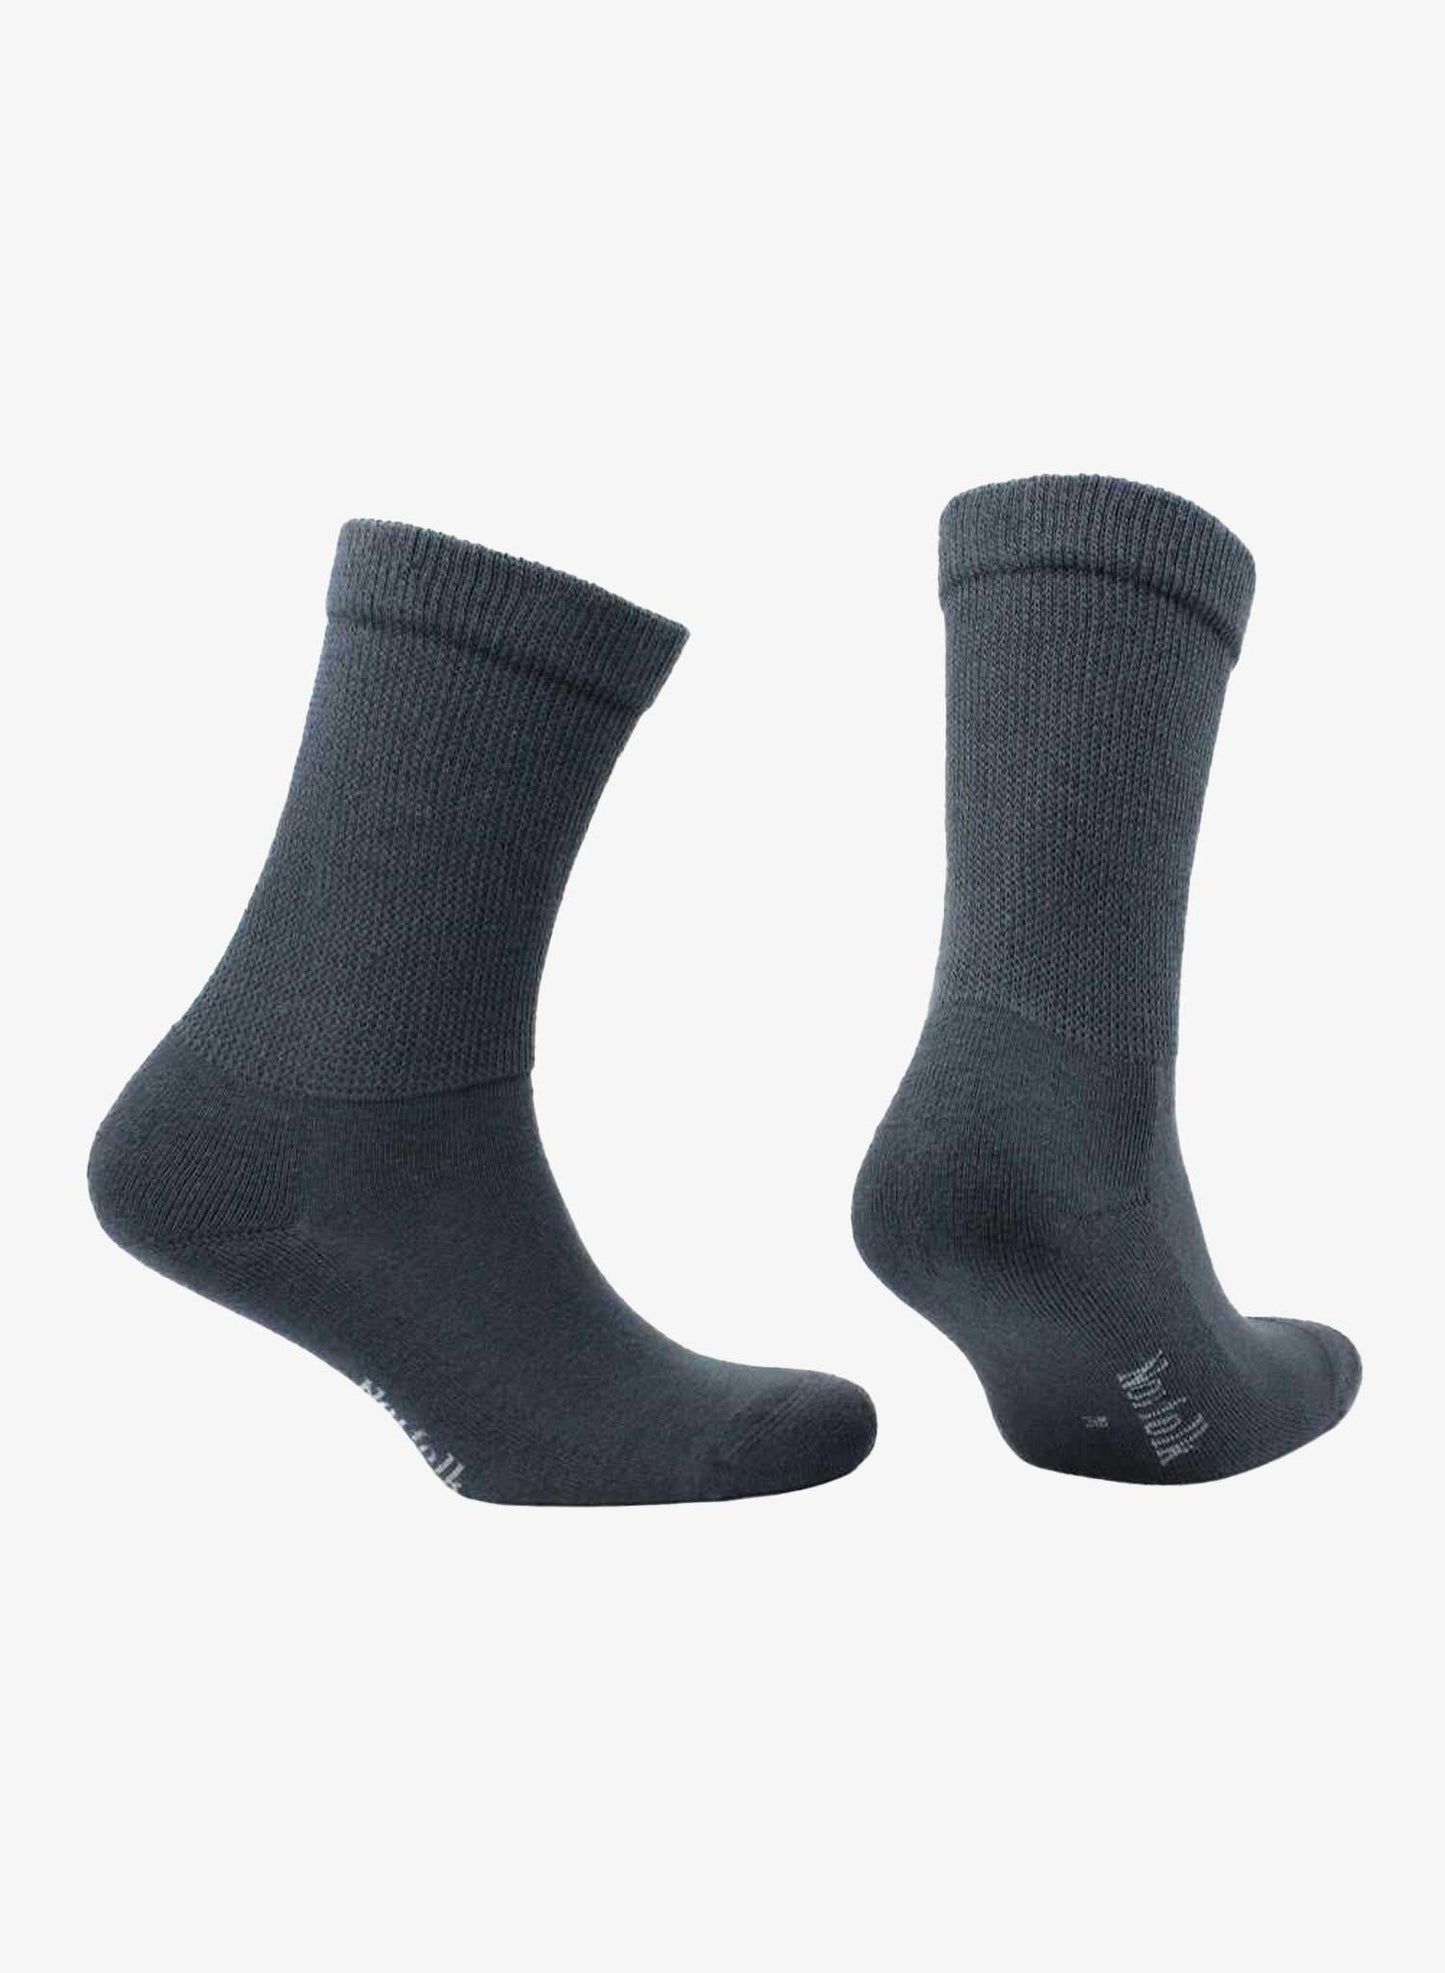 Norfolk Socks Rio - Charcoal Grey